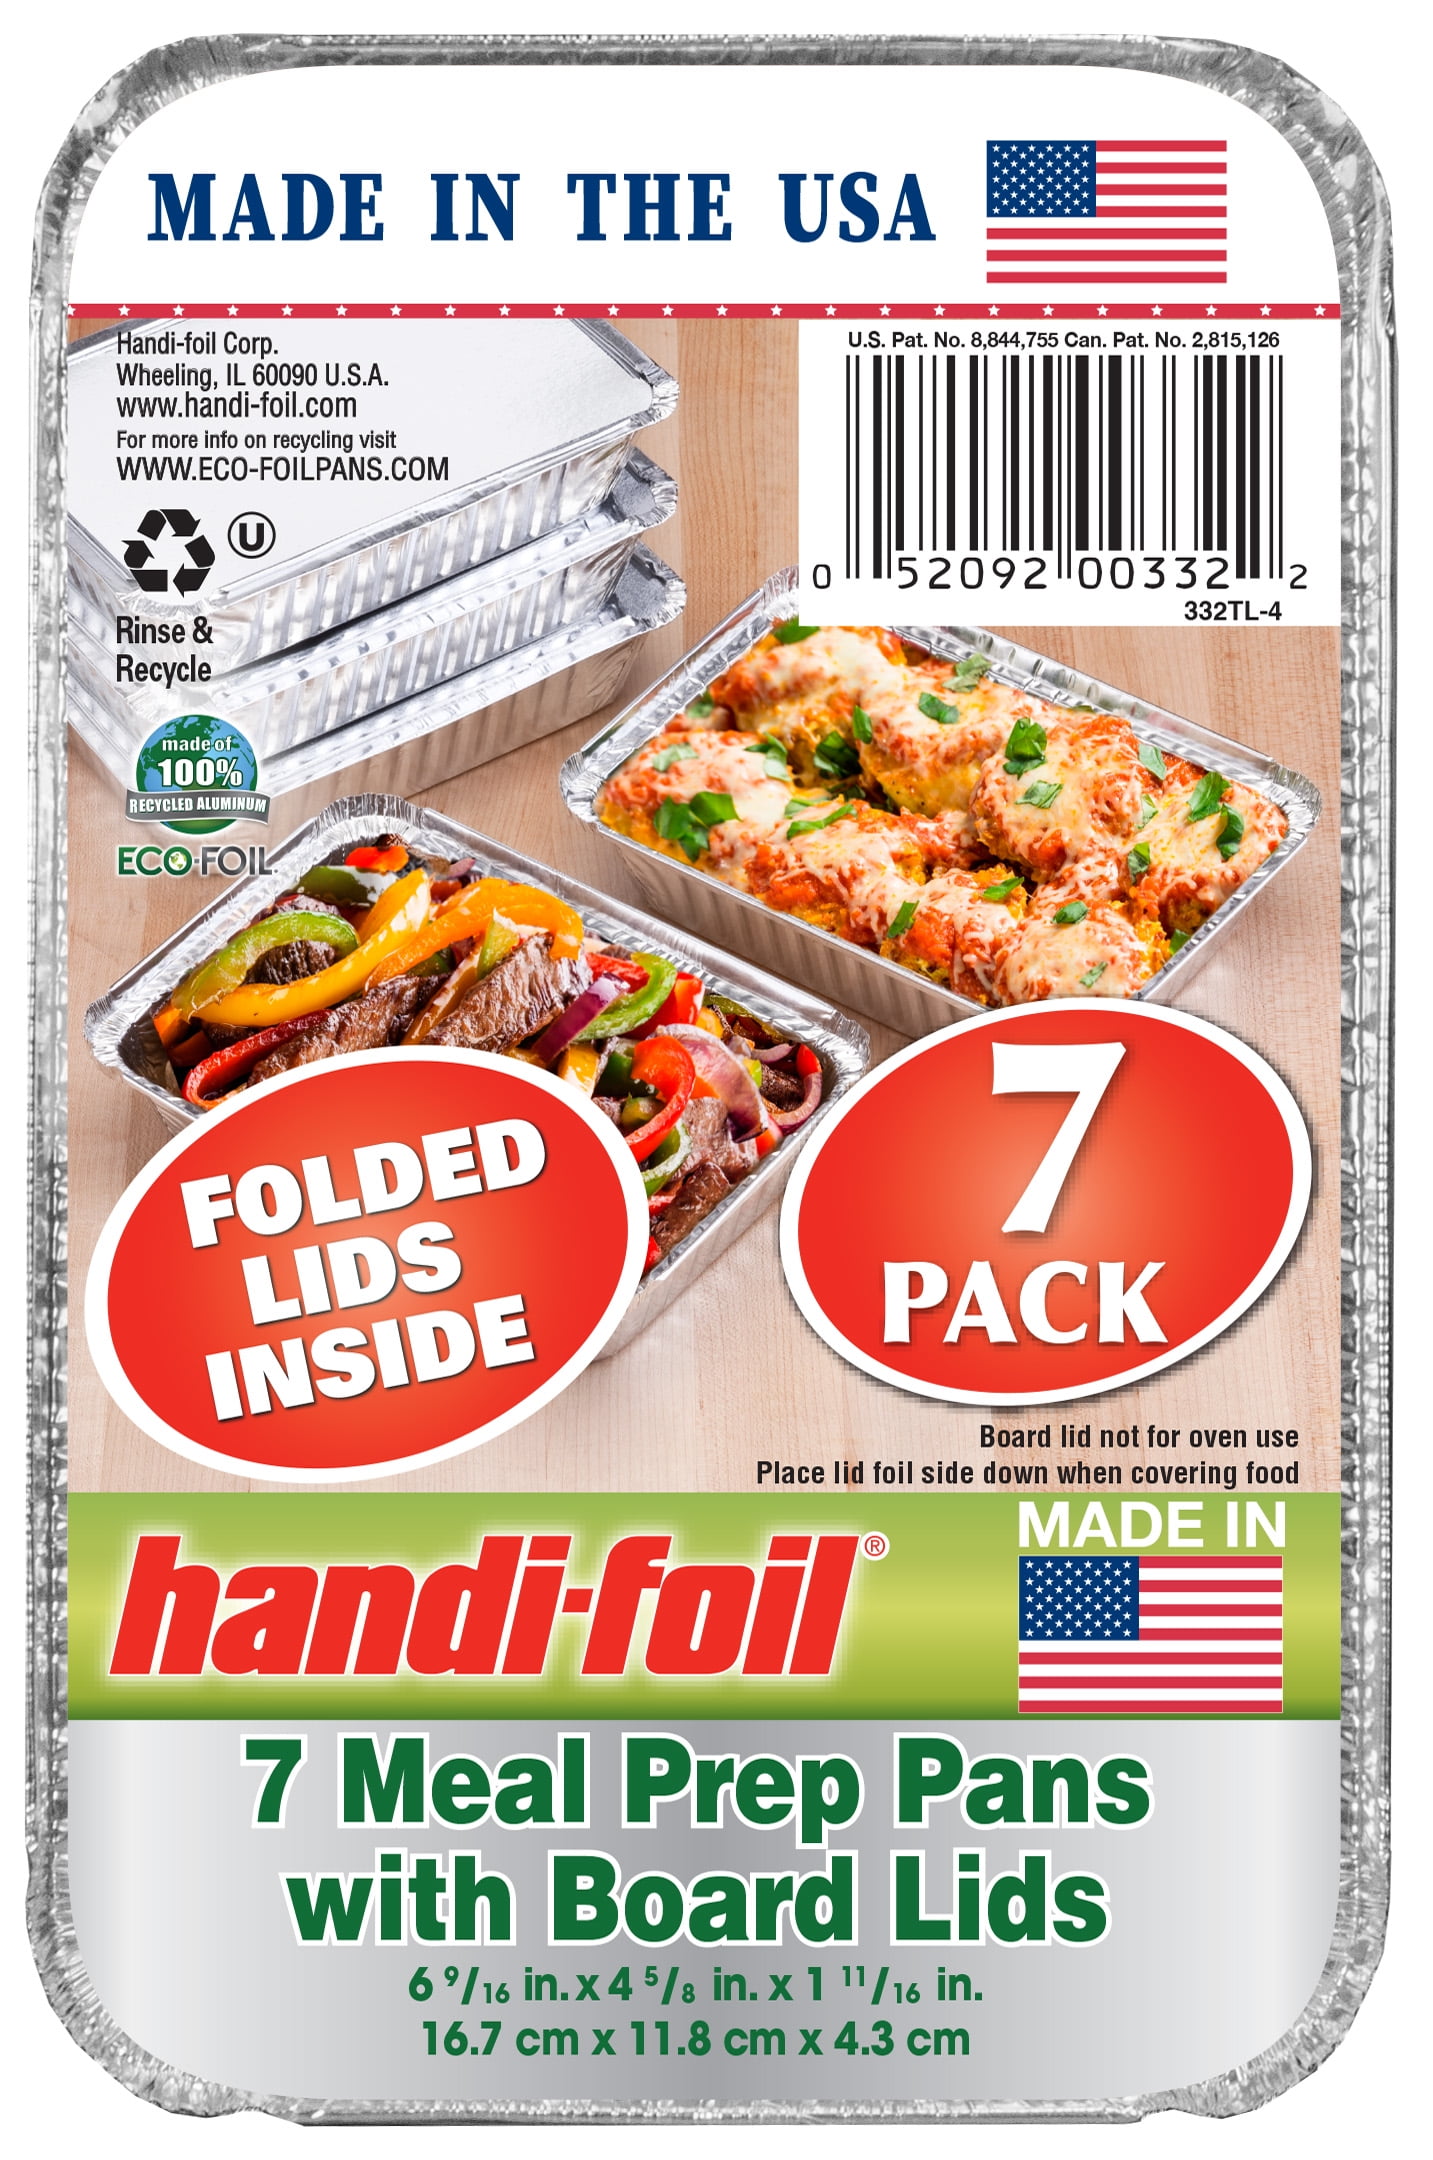 Handi-Foil Aluminum Meal Prep Storage Pan with Folded Lids 7 Count